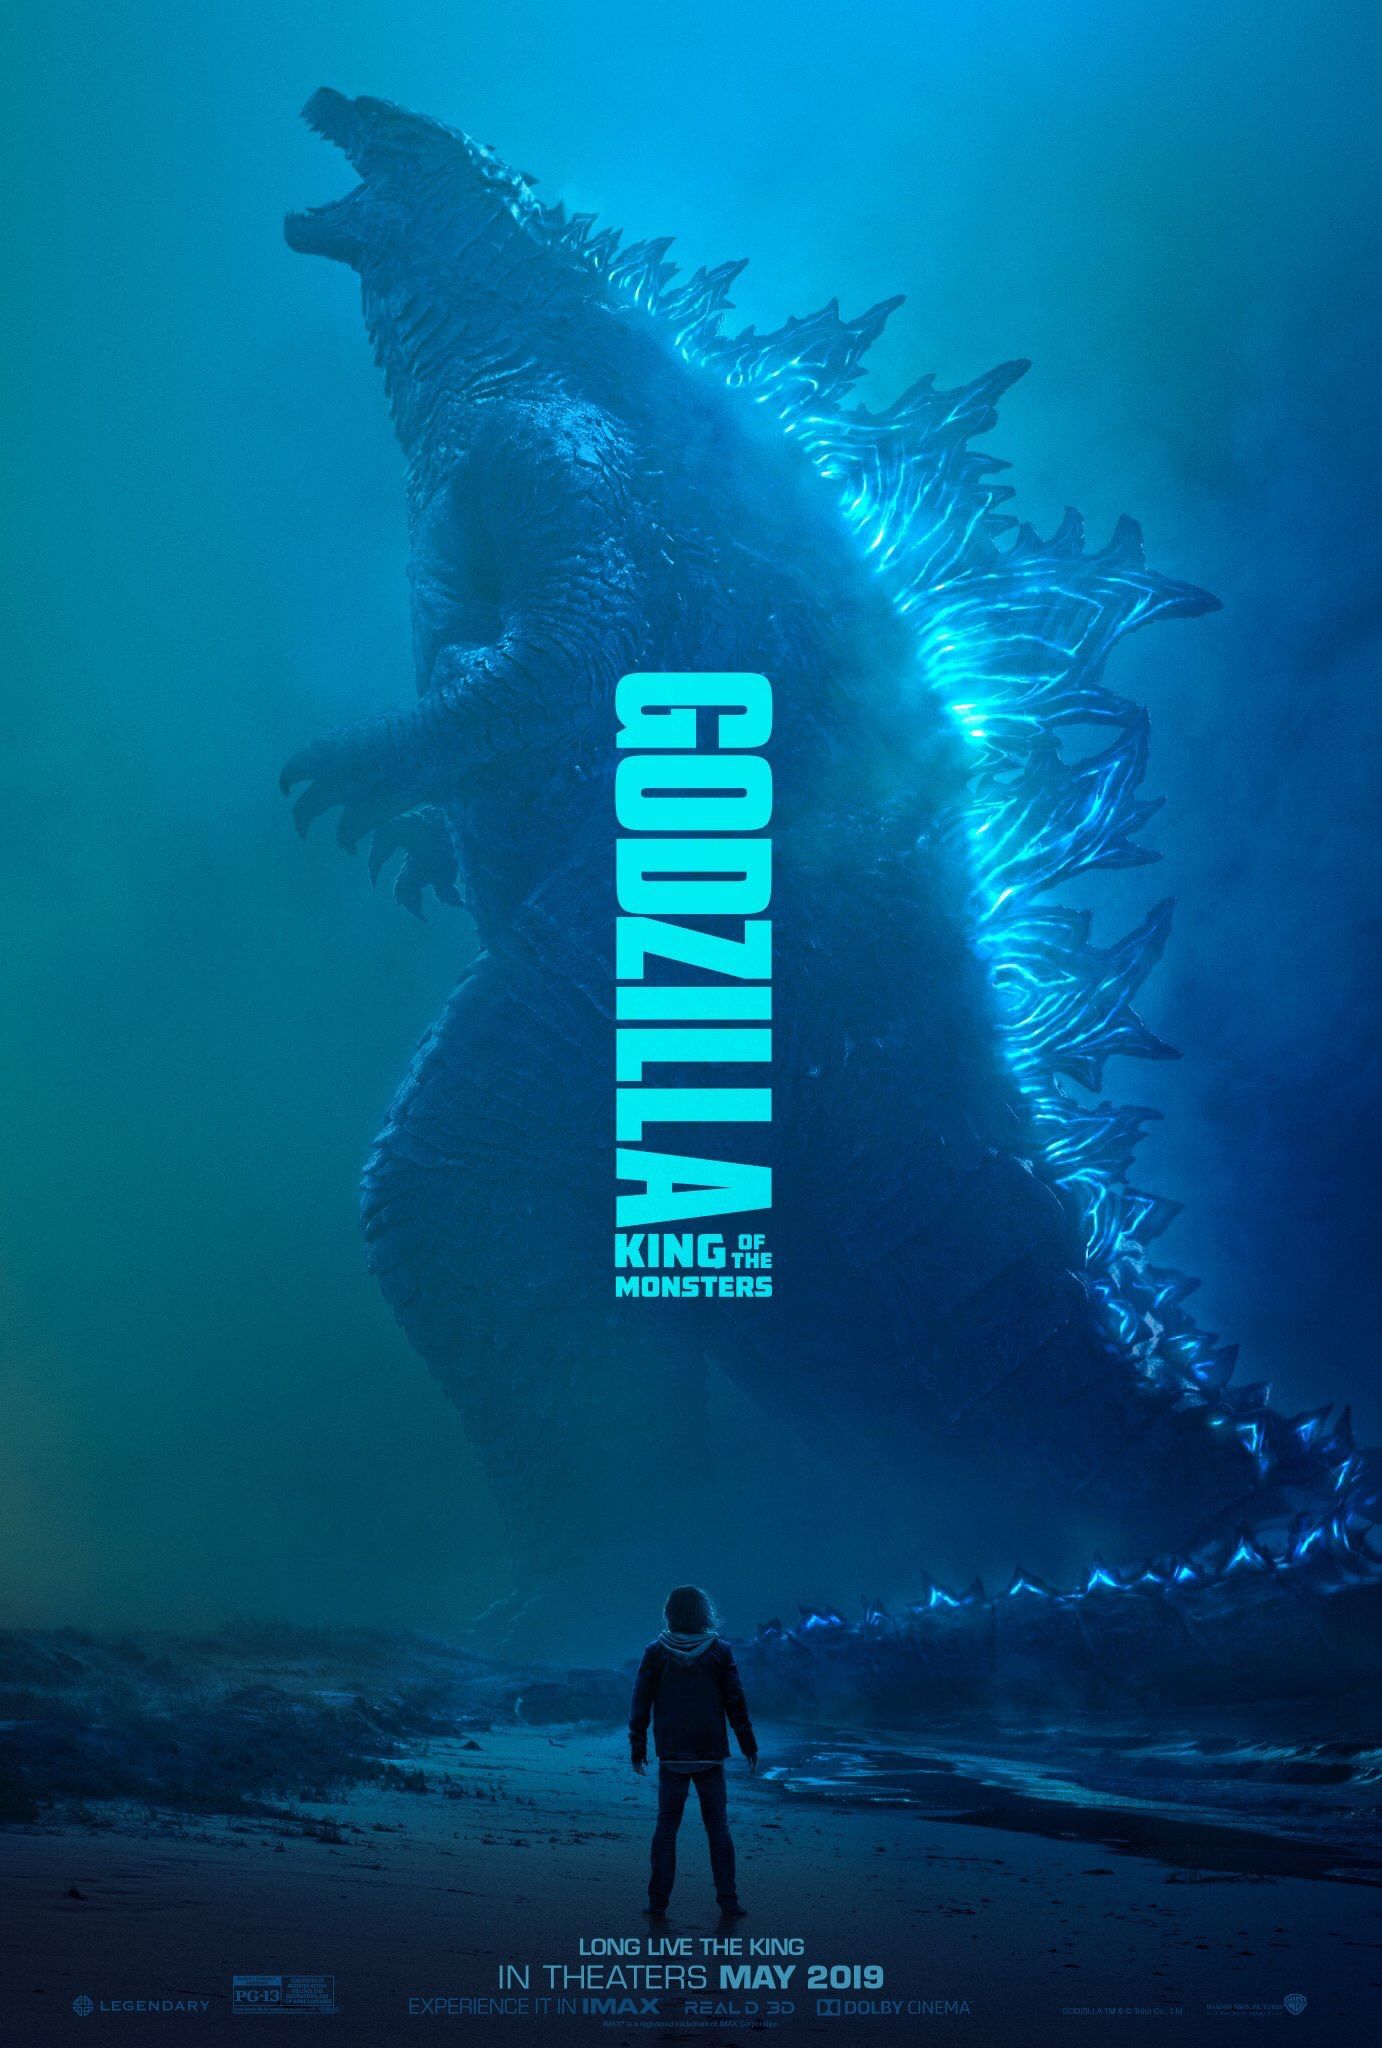 Godzilla poster/ Wallpaper